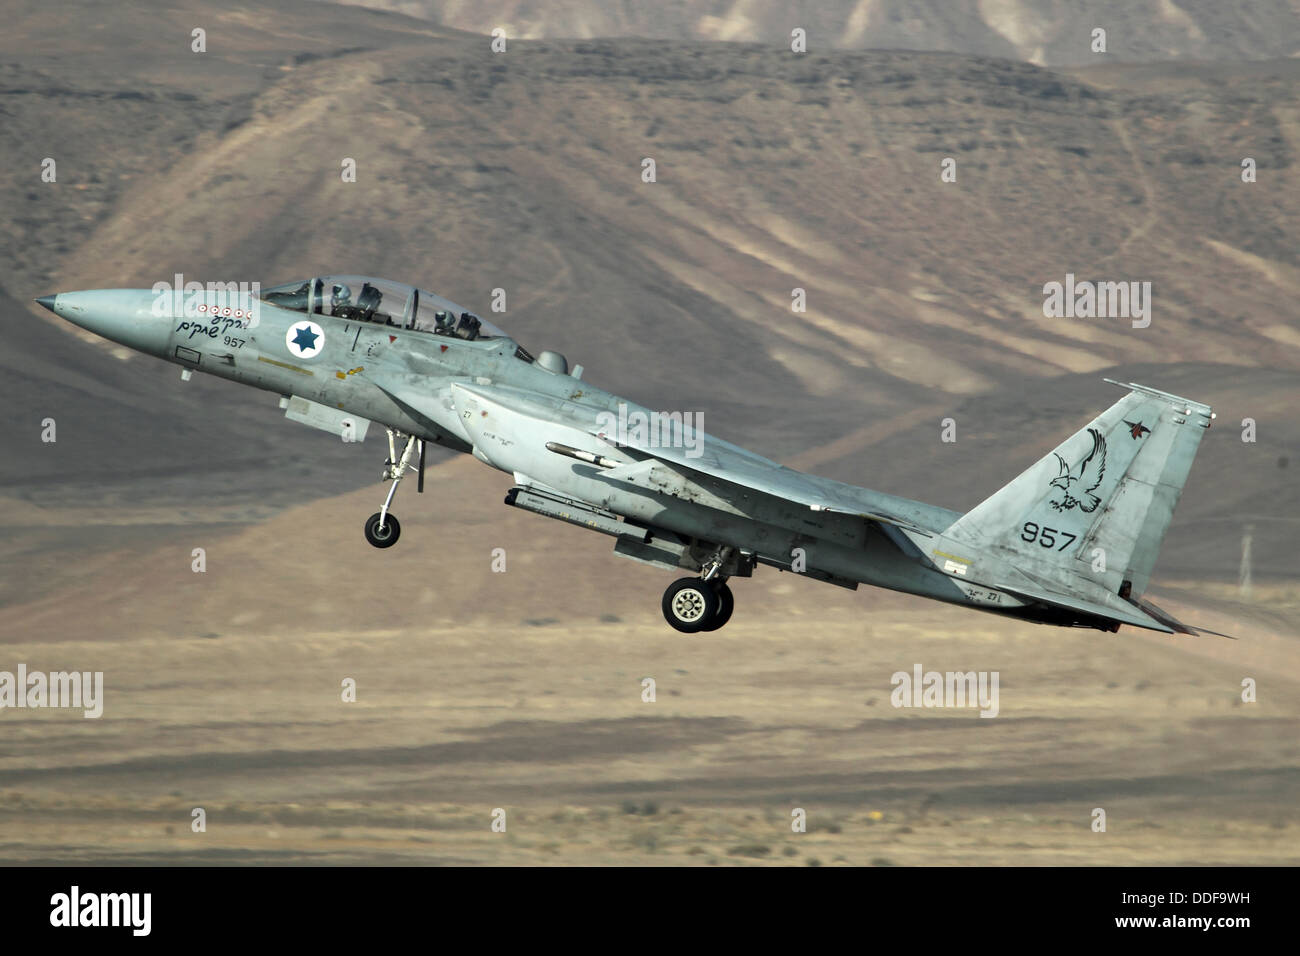 israeli-air-force-iaf-fighter-jet-f-15-bazat-takeoff-DDF9WH.jpg